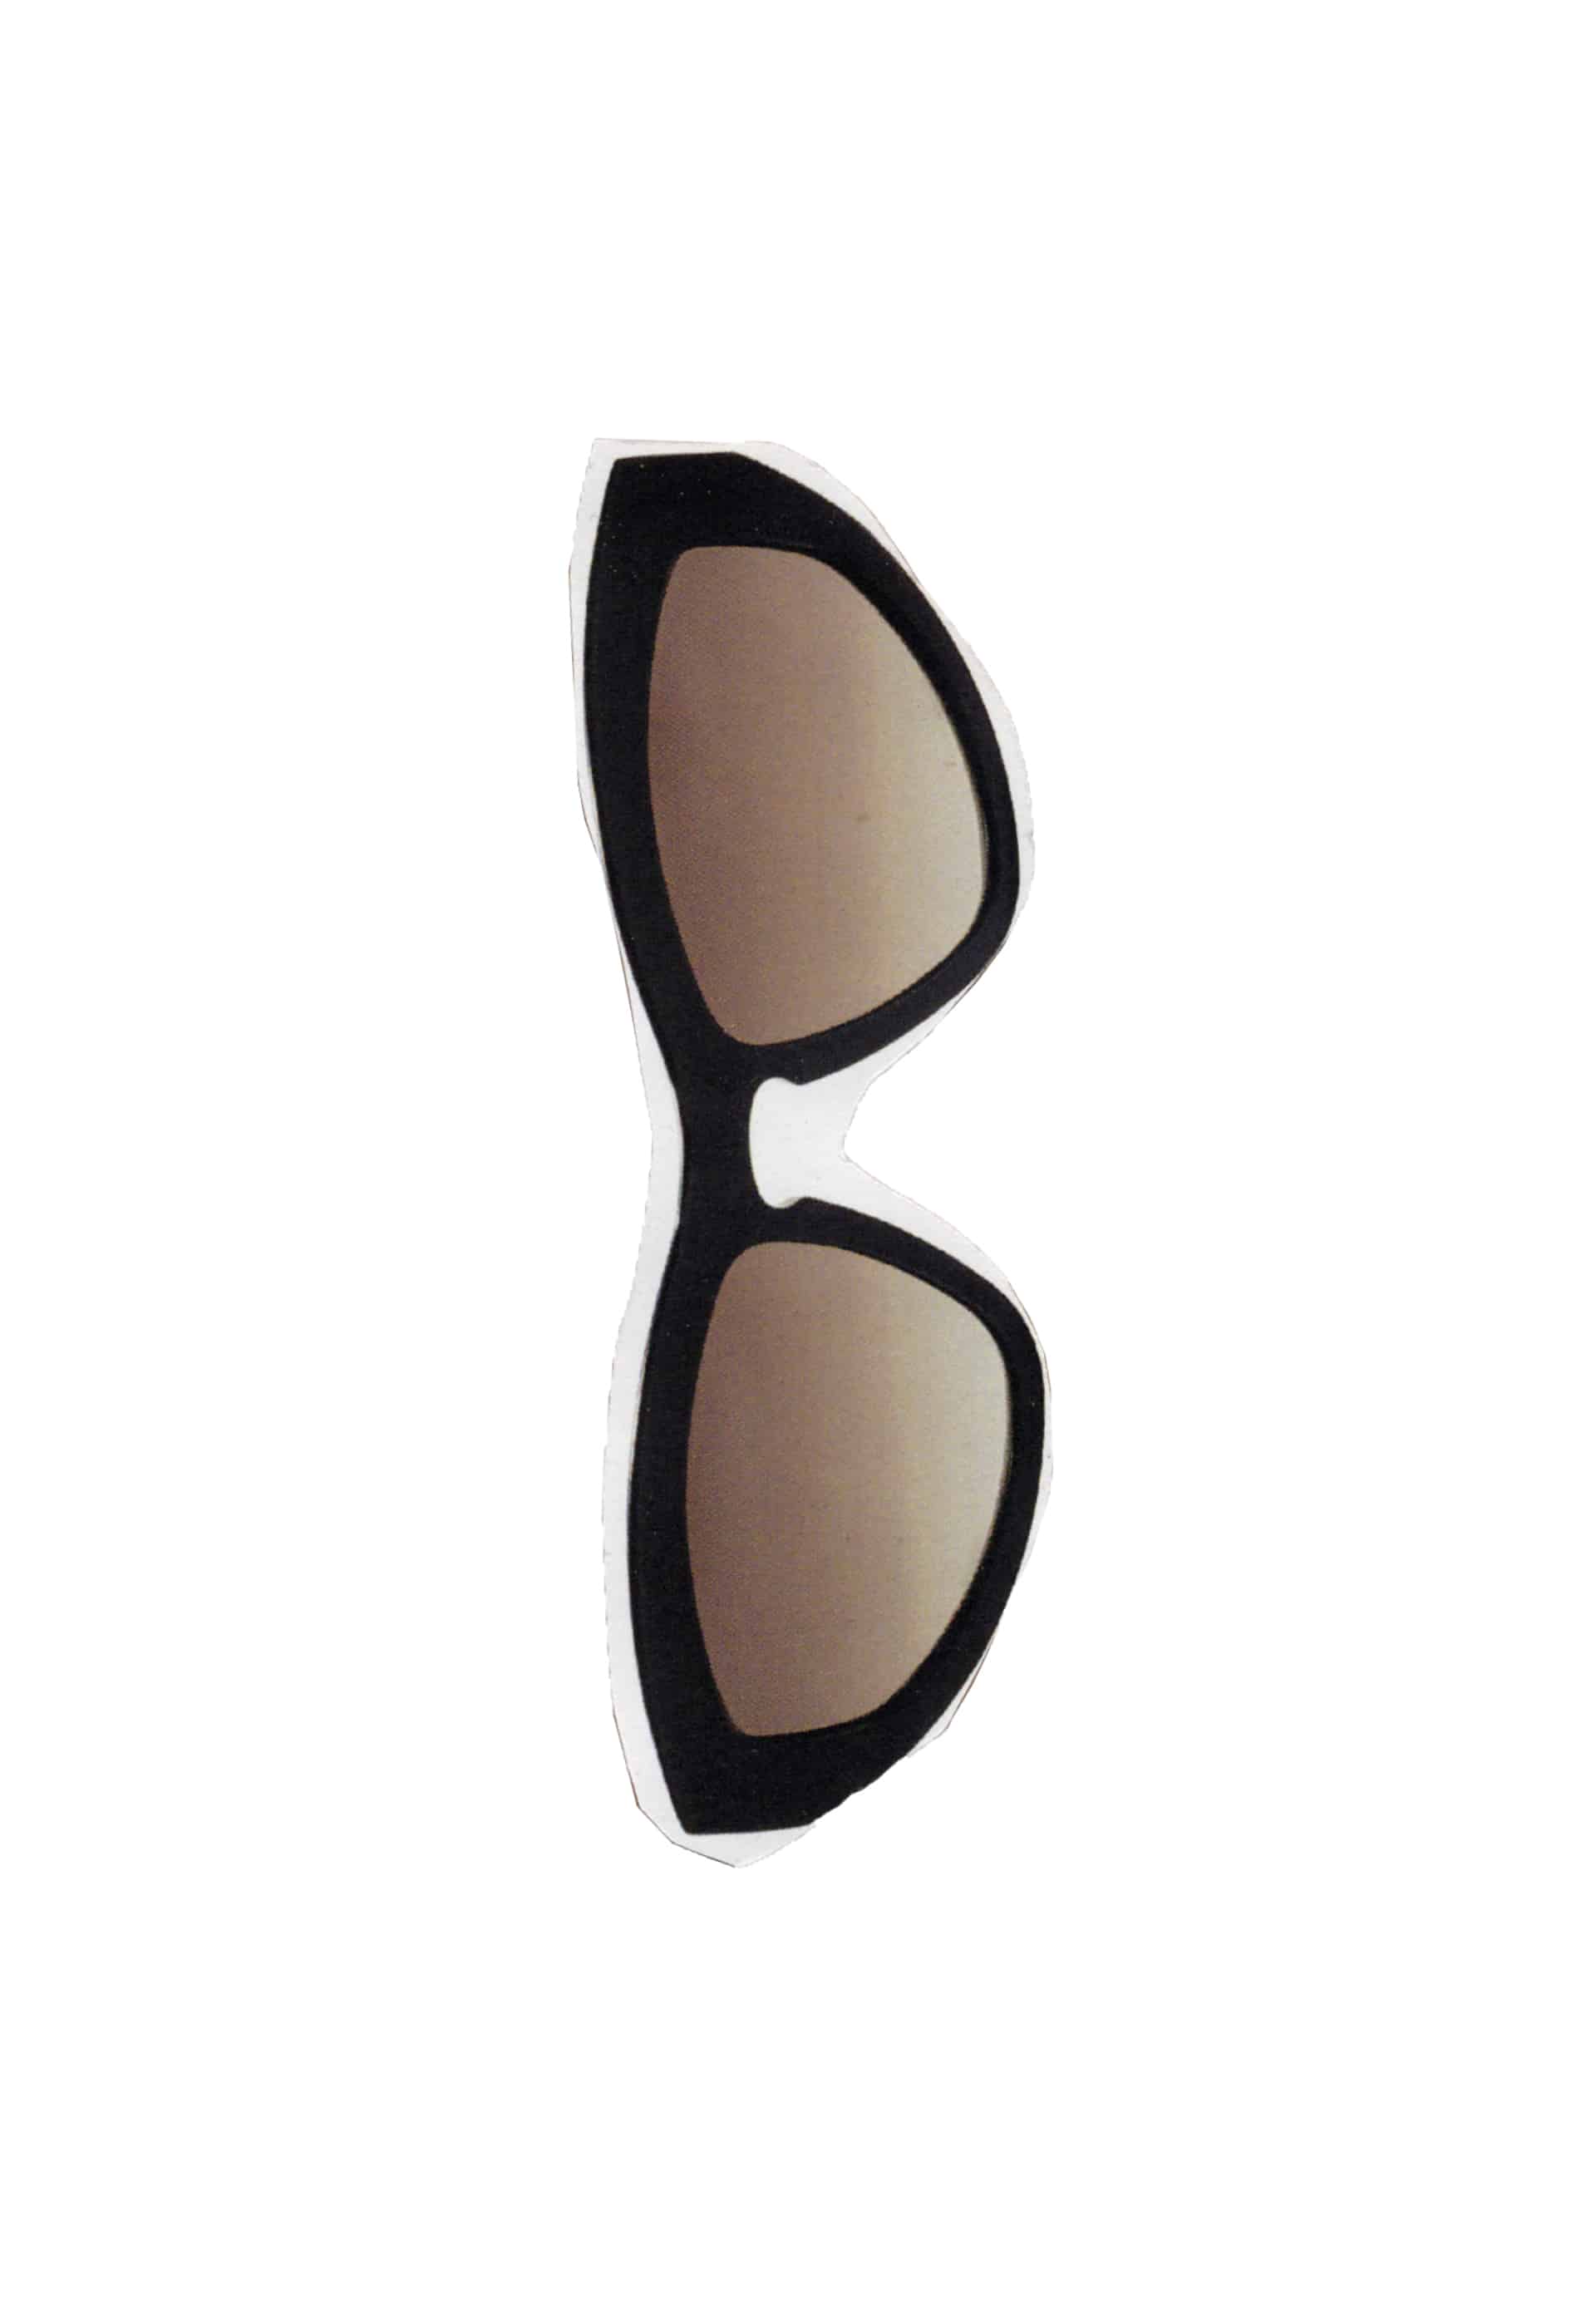 VIU X ARMEDANGELS THE SPECTRAA Sunglasses in cat eye shape made of Eastman Acecate Renew